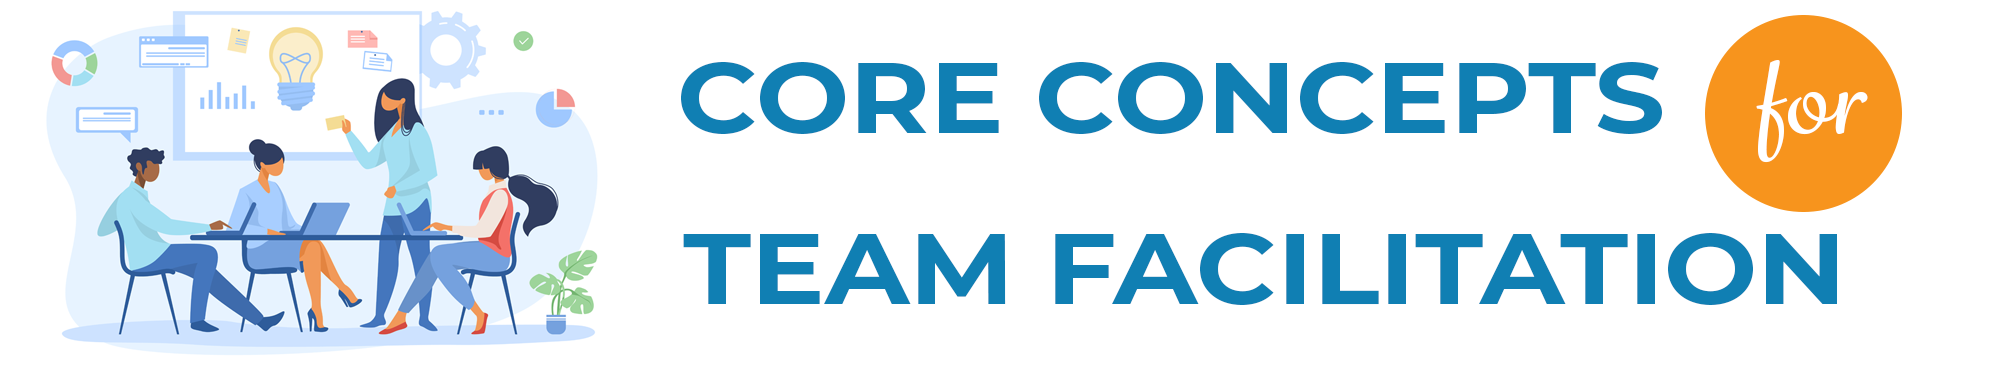 Course title: Core Concepts for Team Facilitation